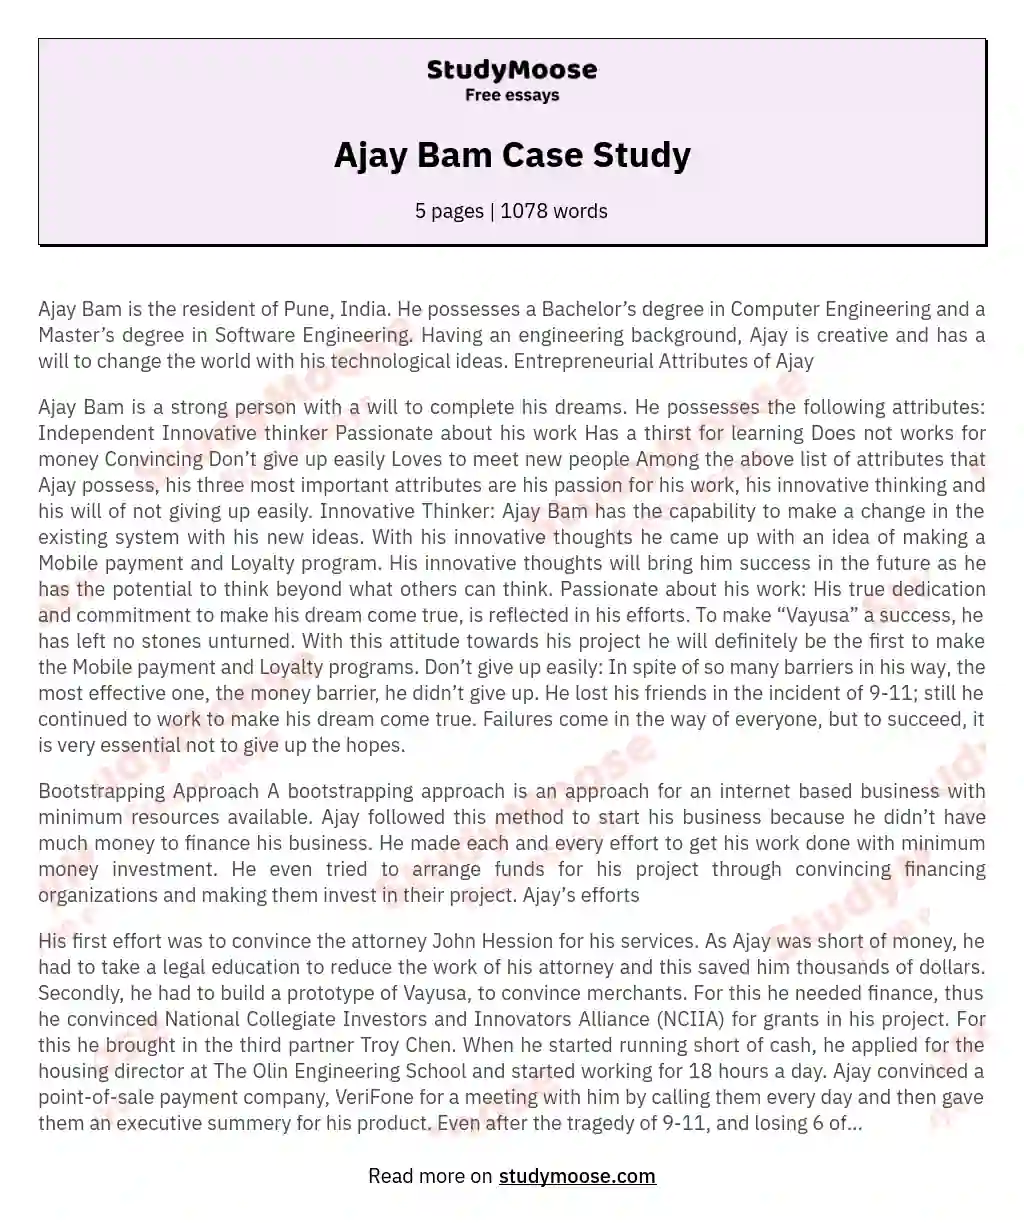 Ajay Bam Case Study essay